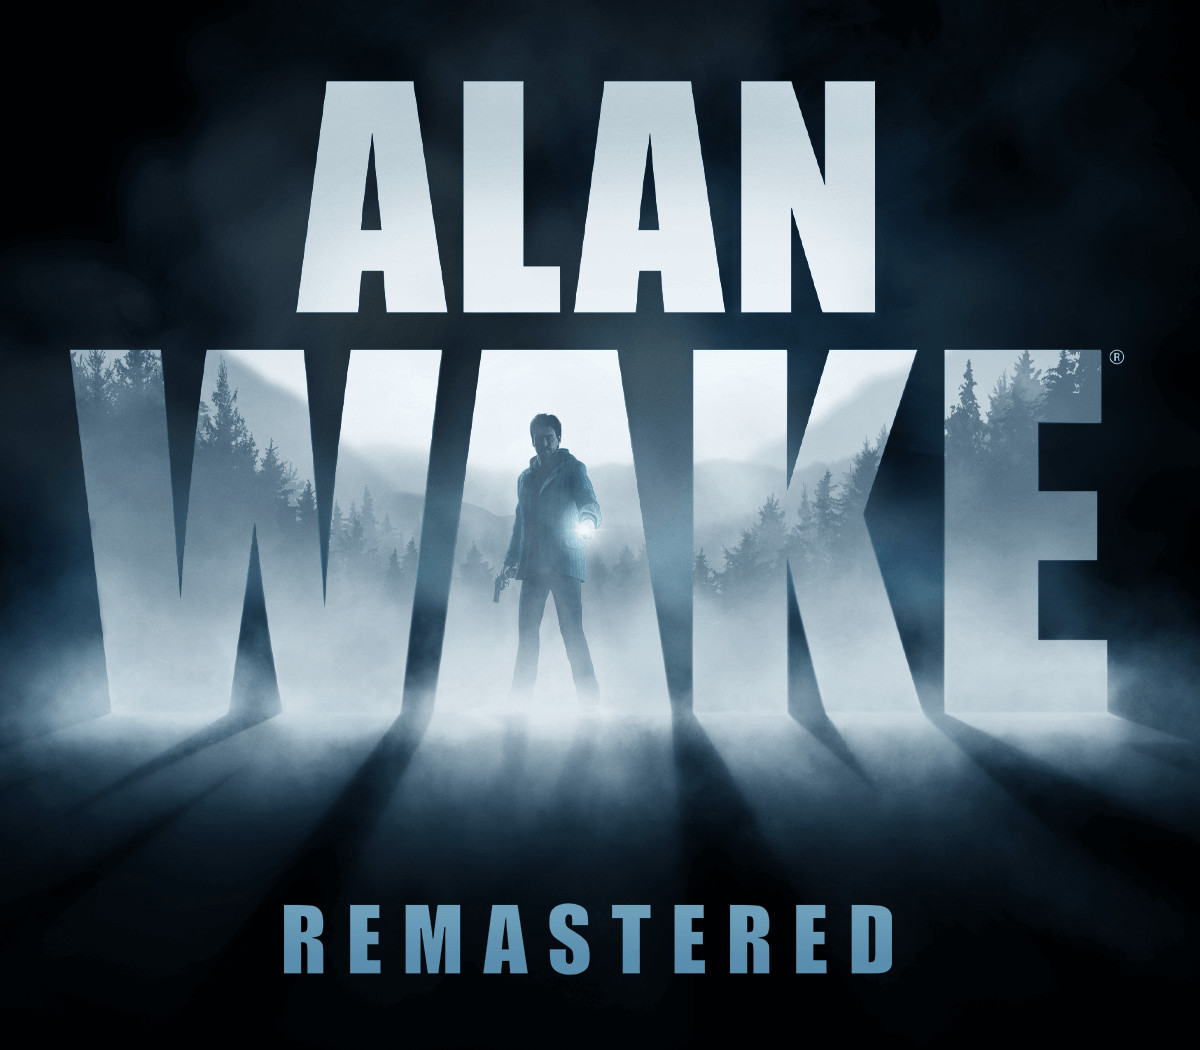 Alan Wake Collector's Edition | Steam